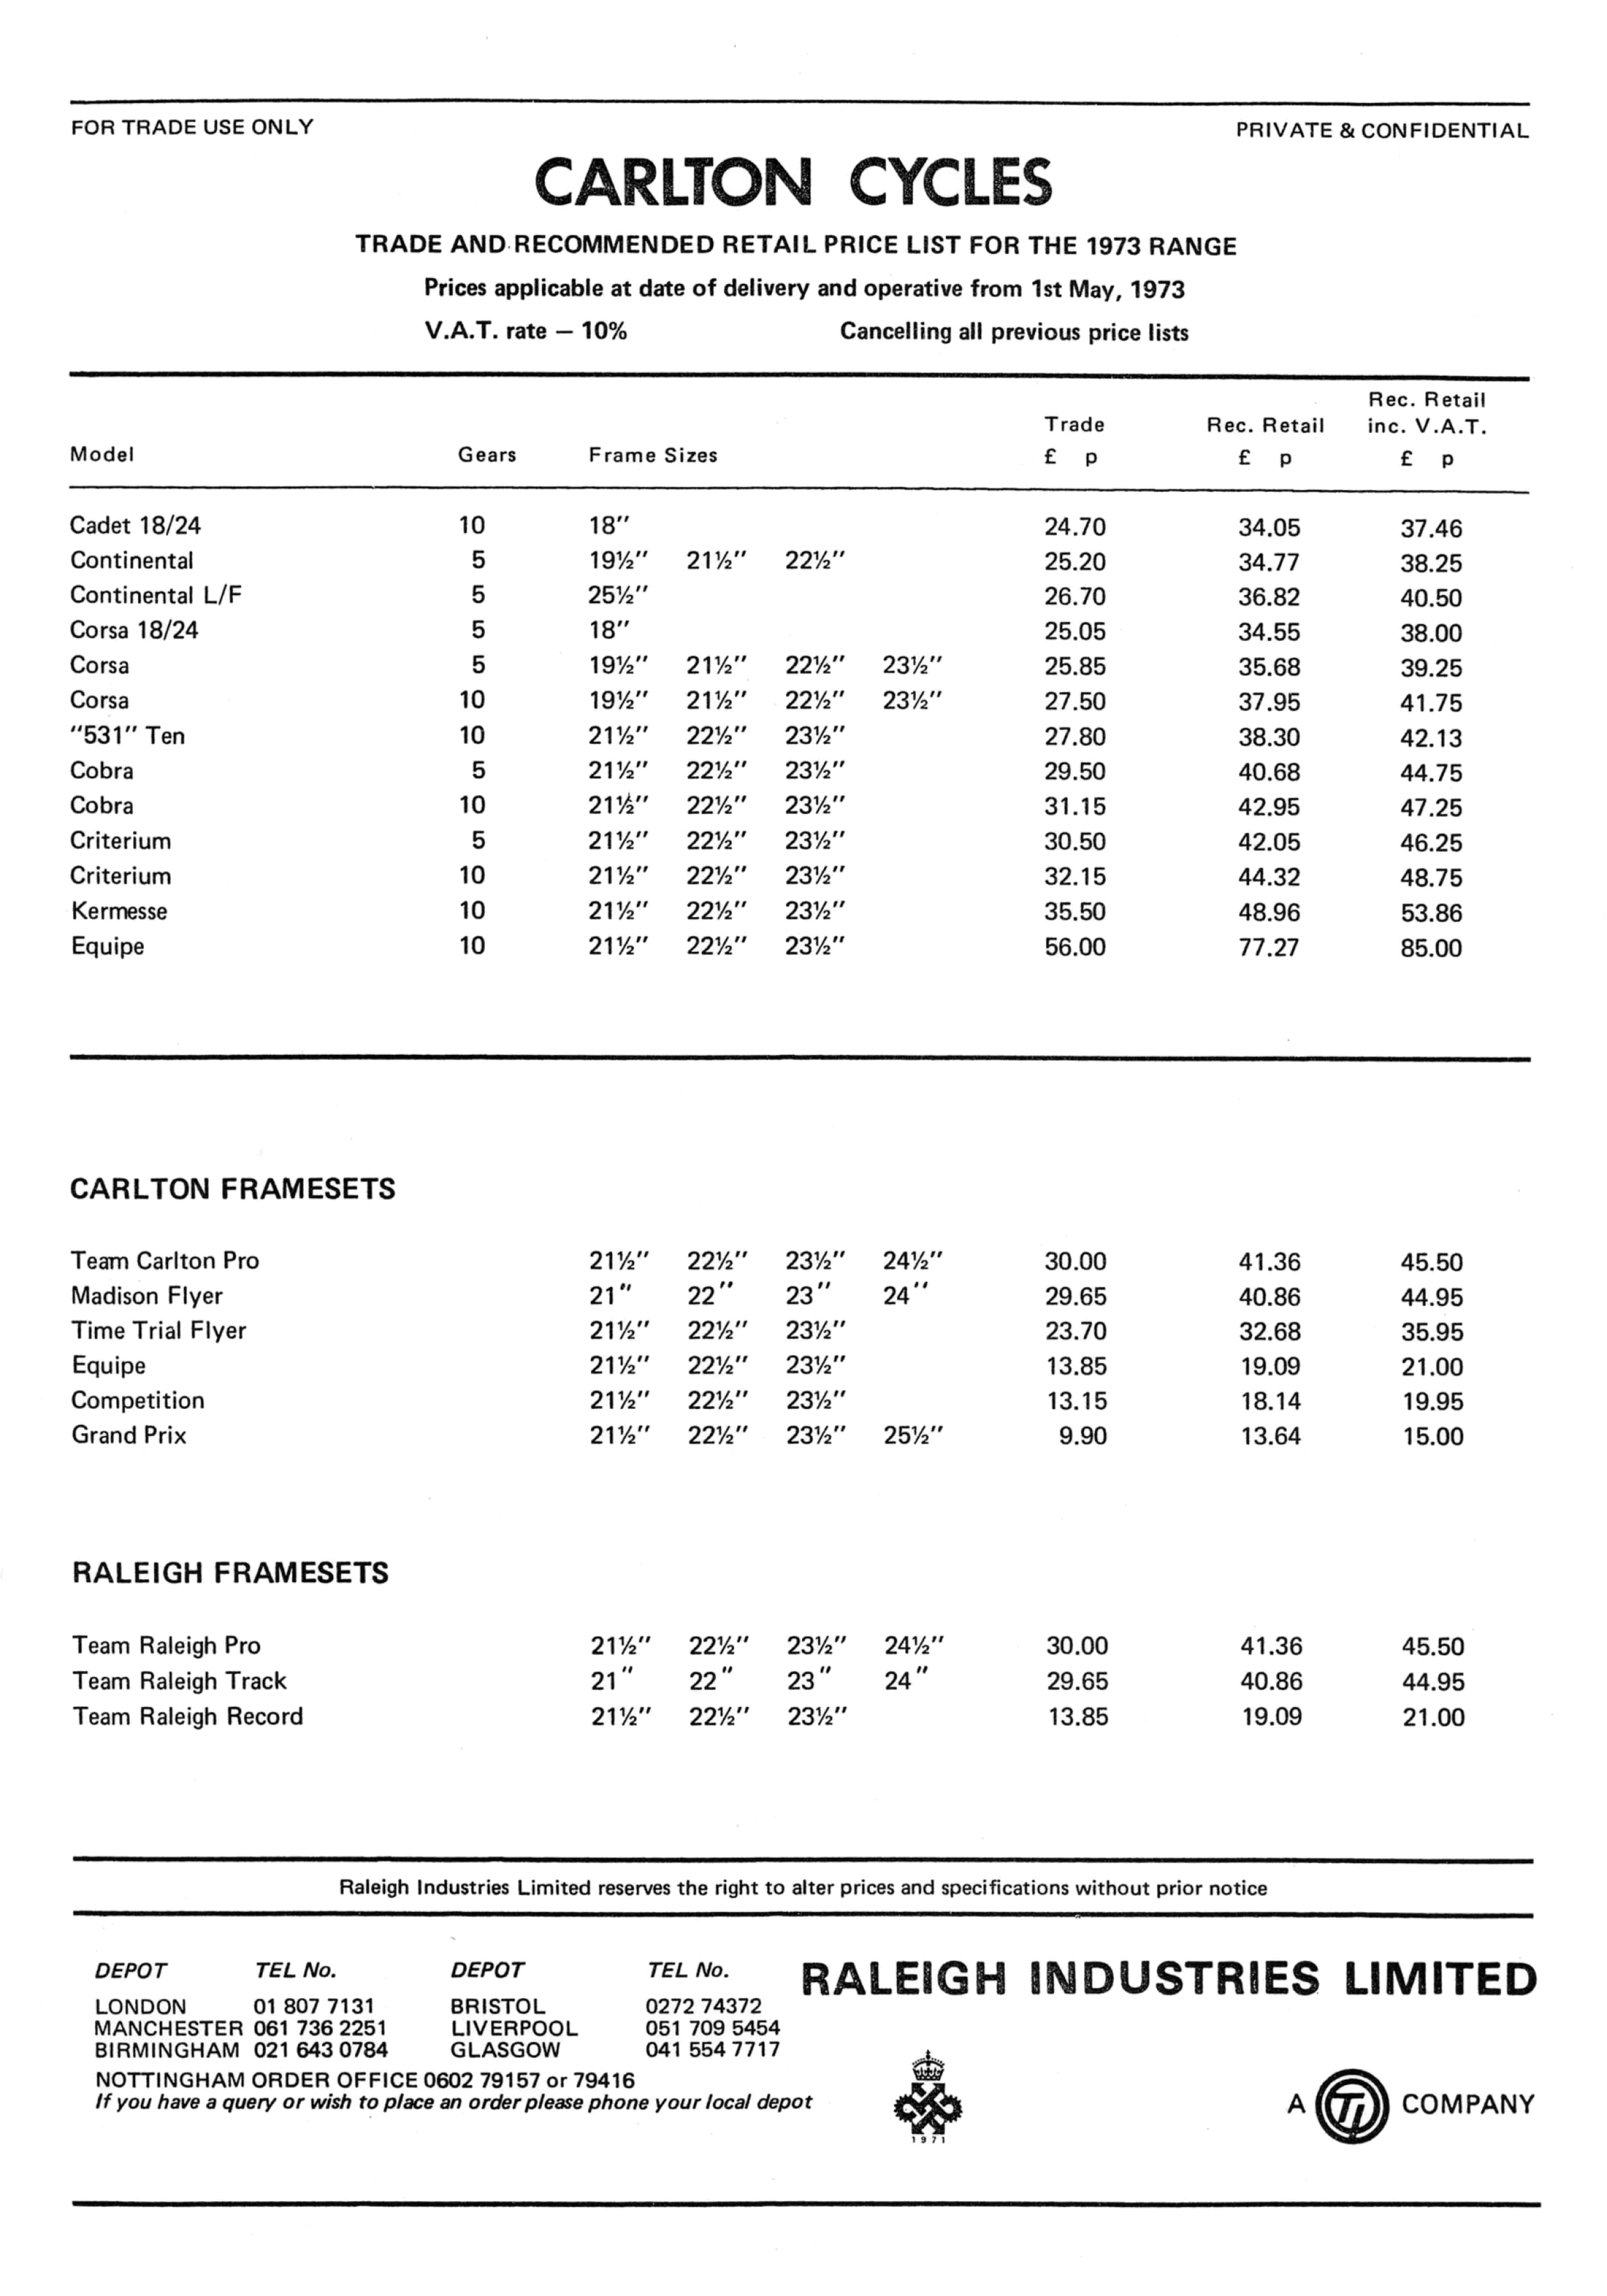 1973 Carlton Cycles Price List